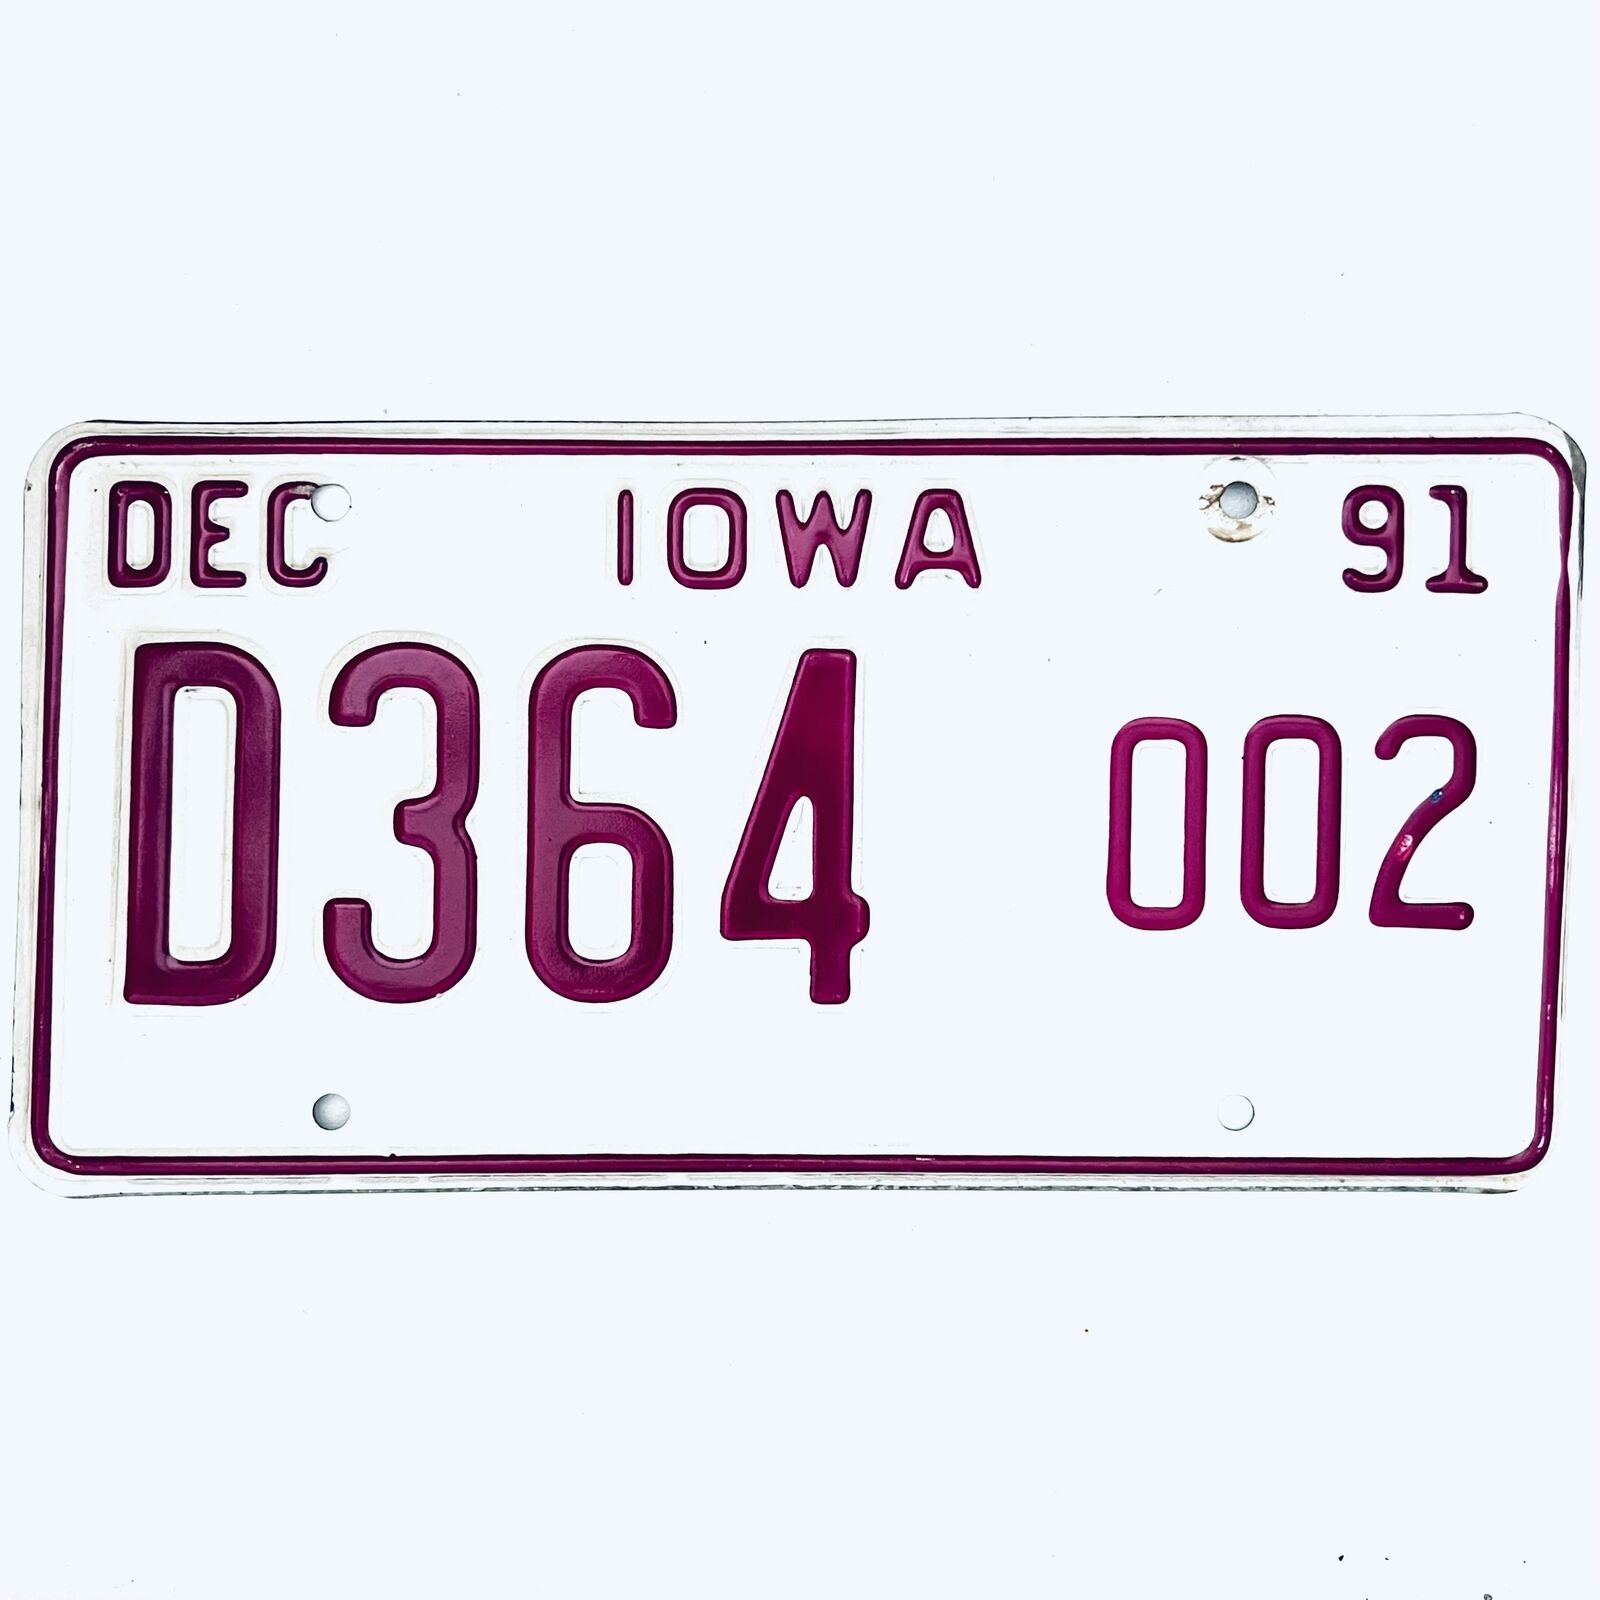 1991 United States Iowa Base Dealer License Plate D364 002